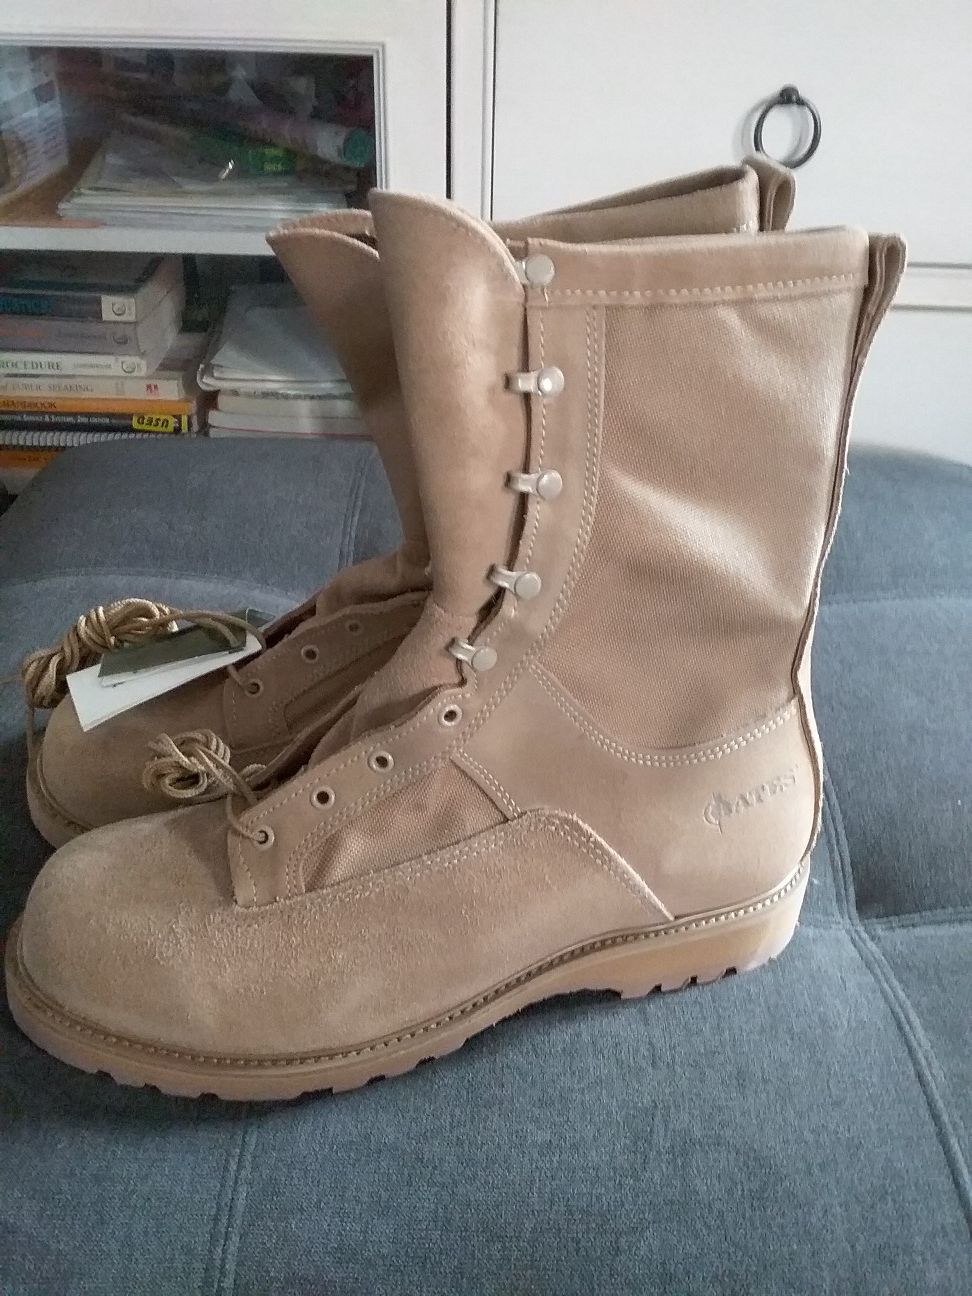 NEW Bates military boots Vibram gore-tex size 14.5xw $85 p/u/Fontana